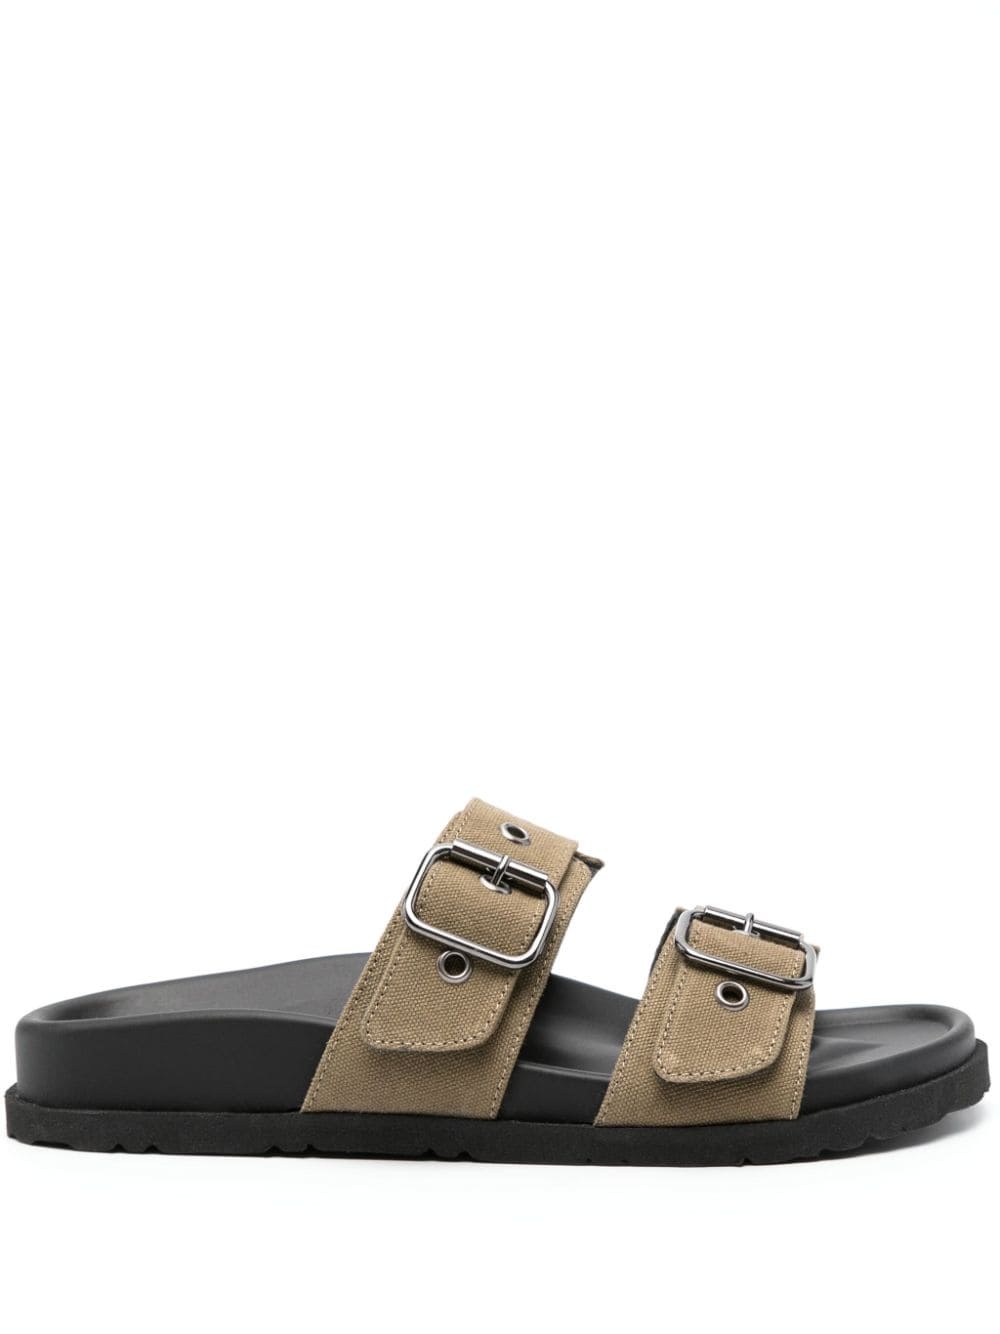 buckle-strap sandals - 1